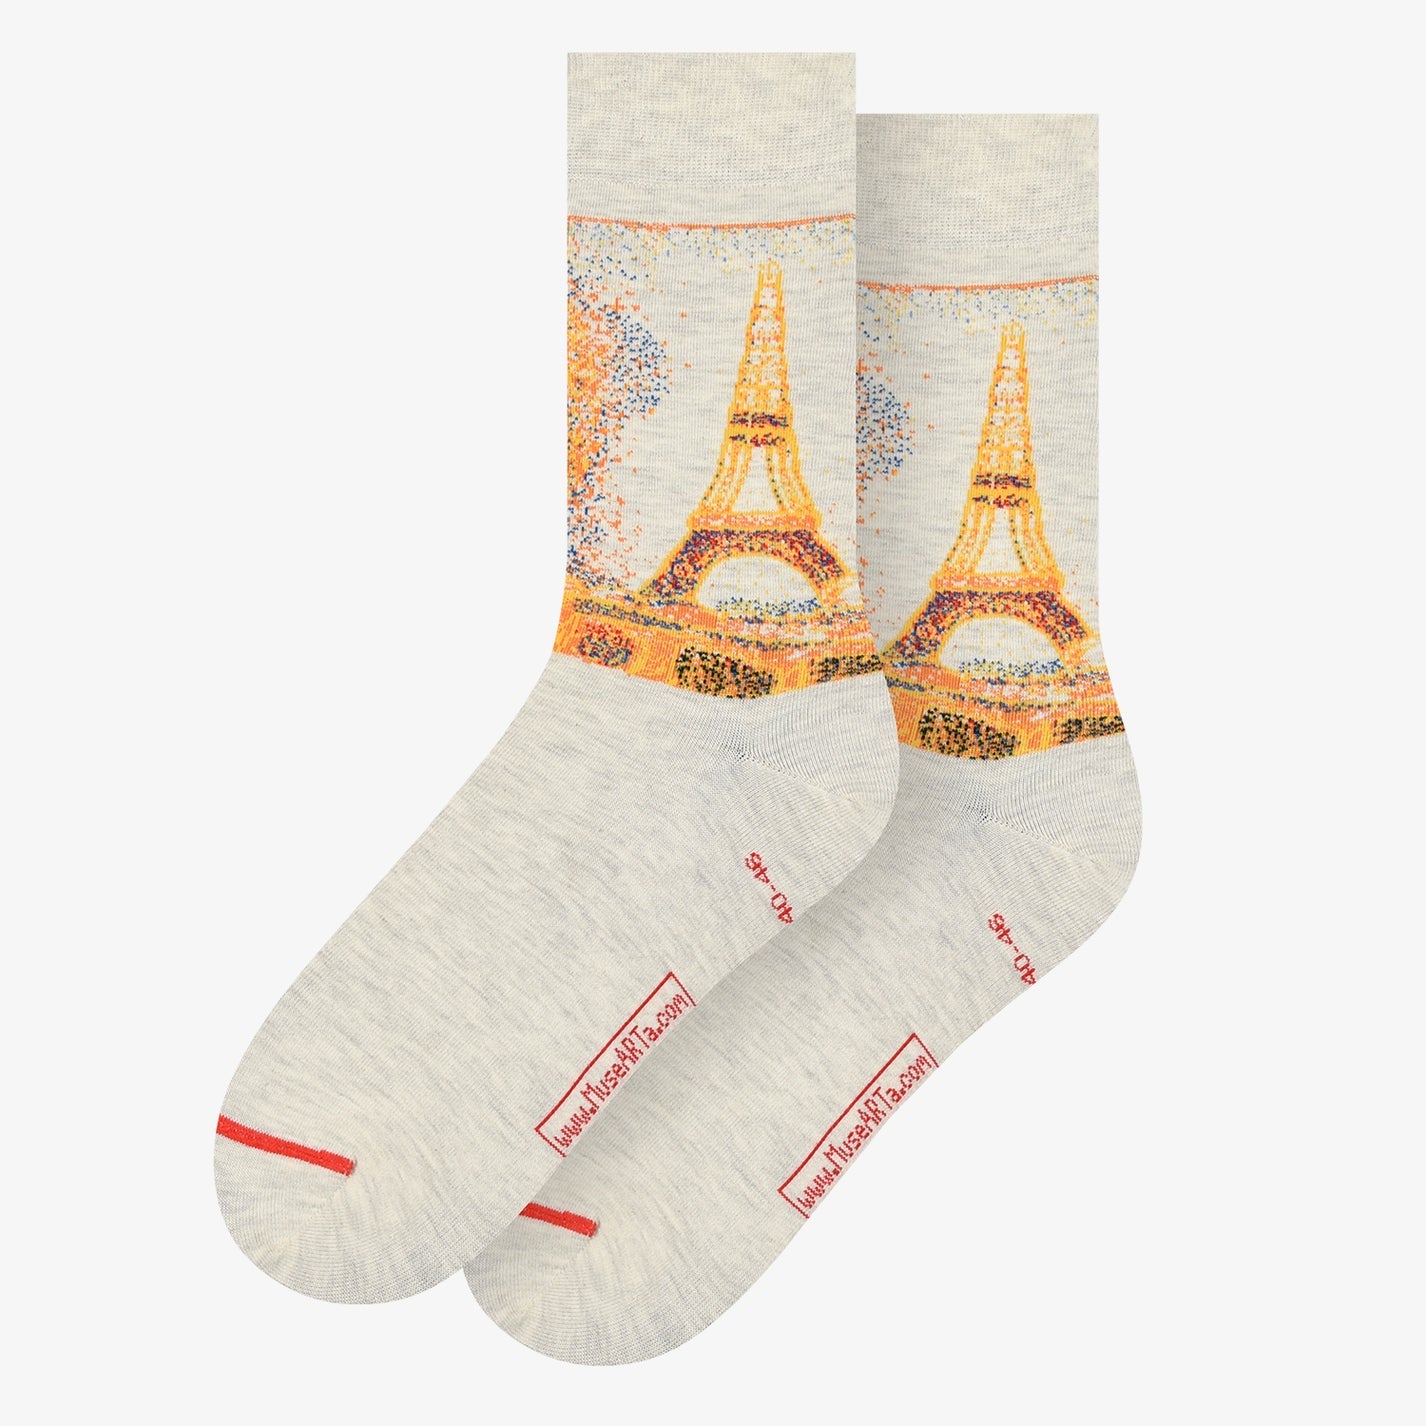 Seurat's Eiffel Tower Socks - Chrysler Museum Shop